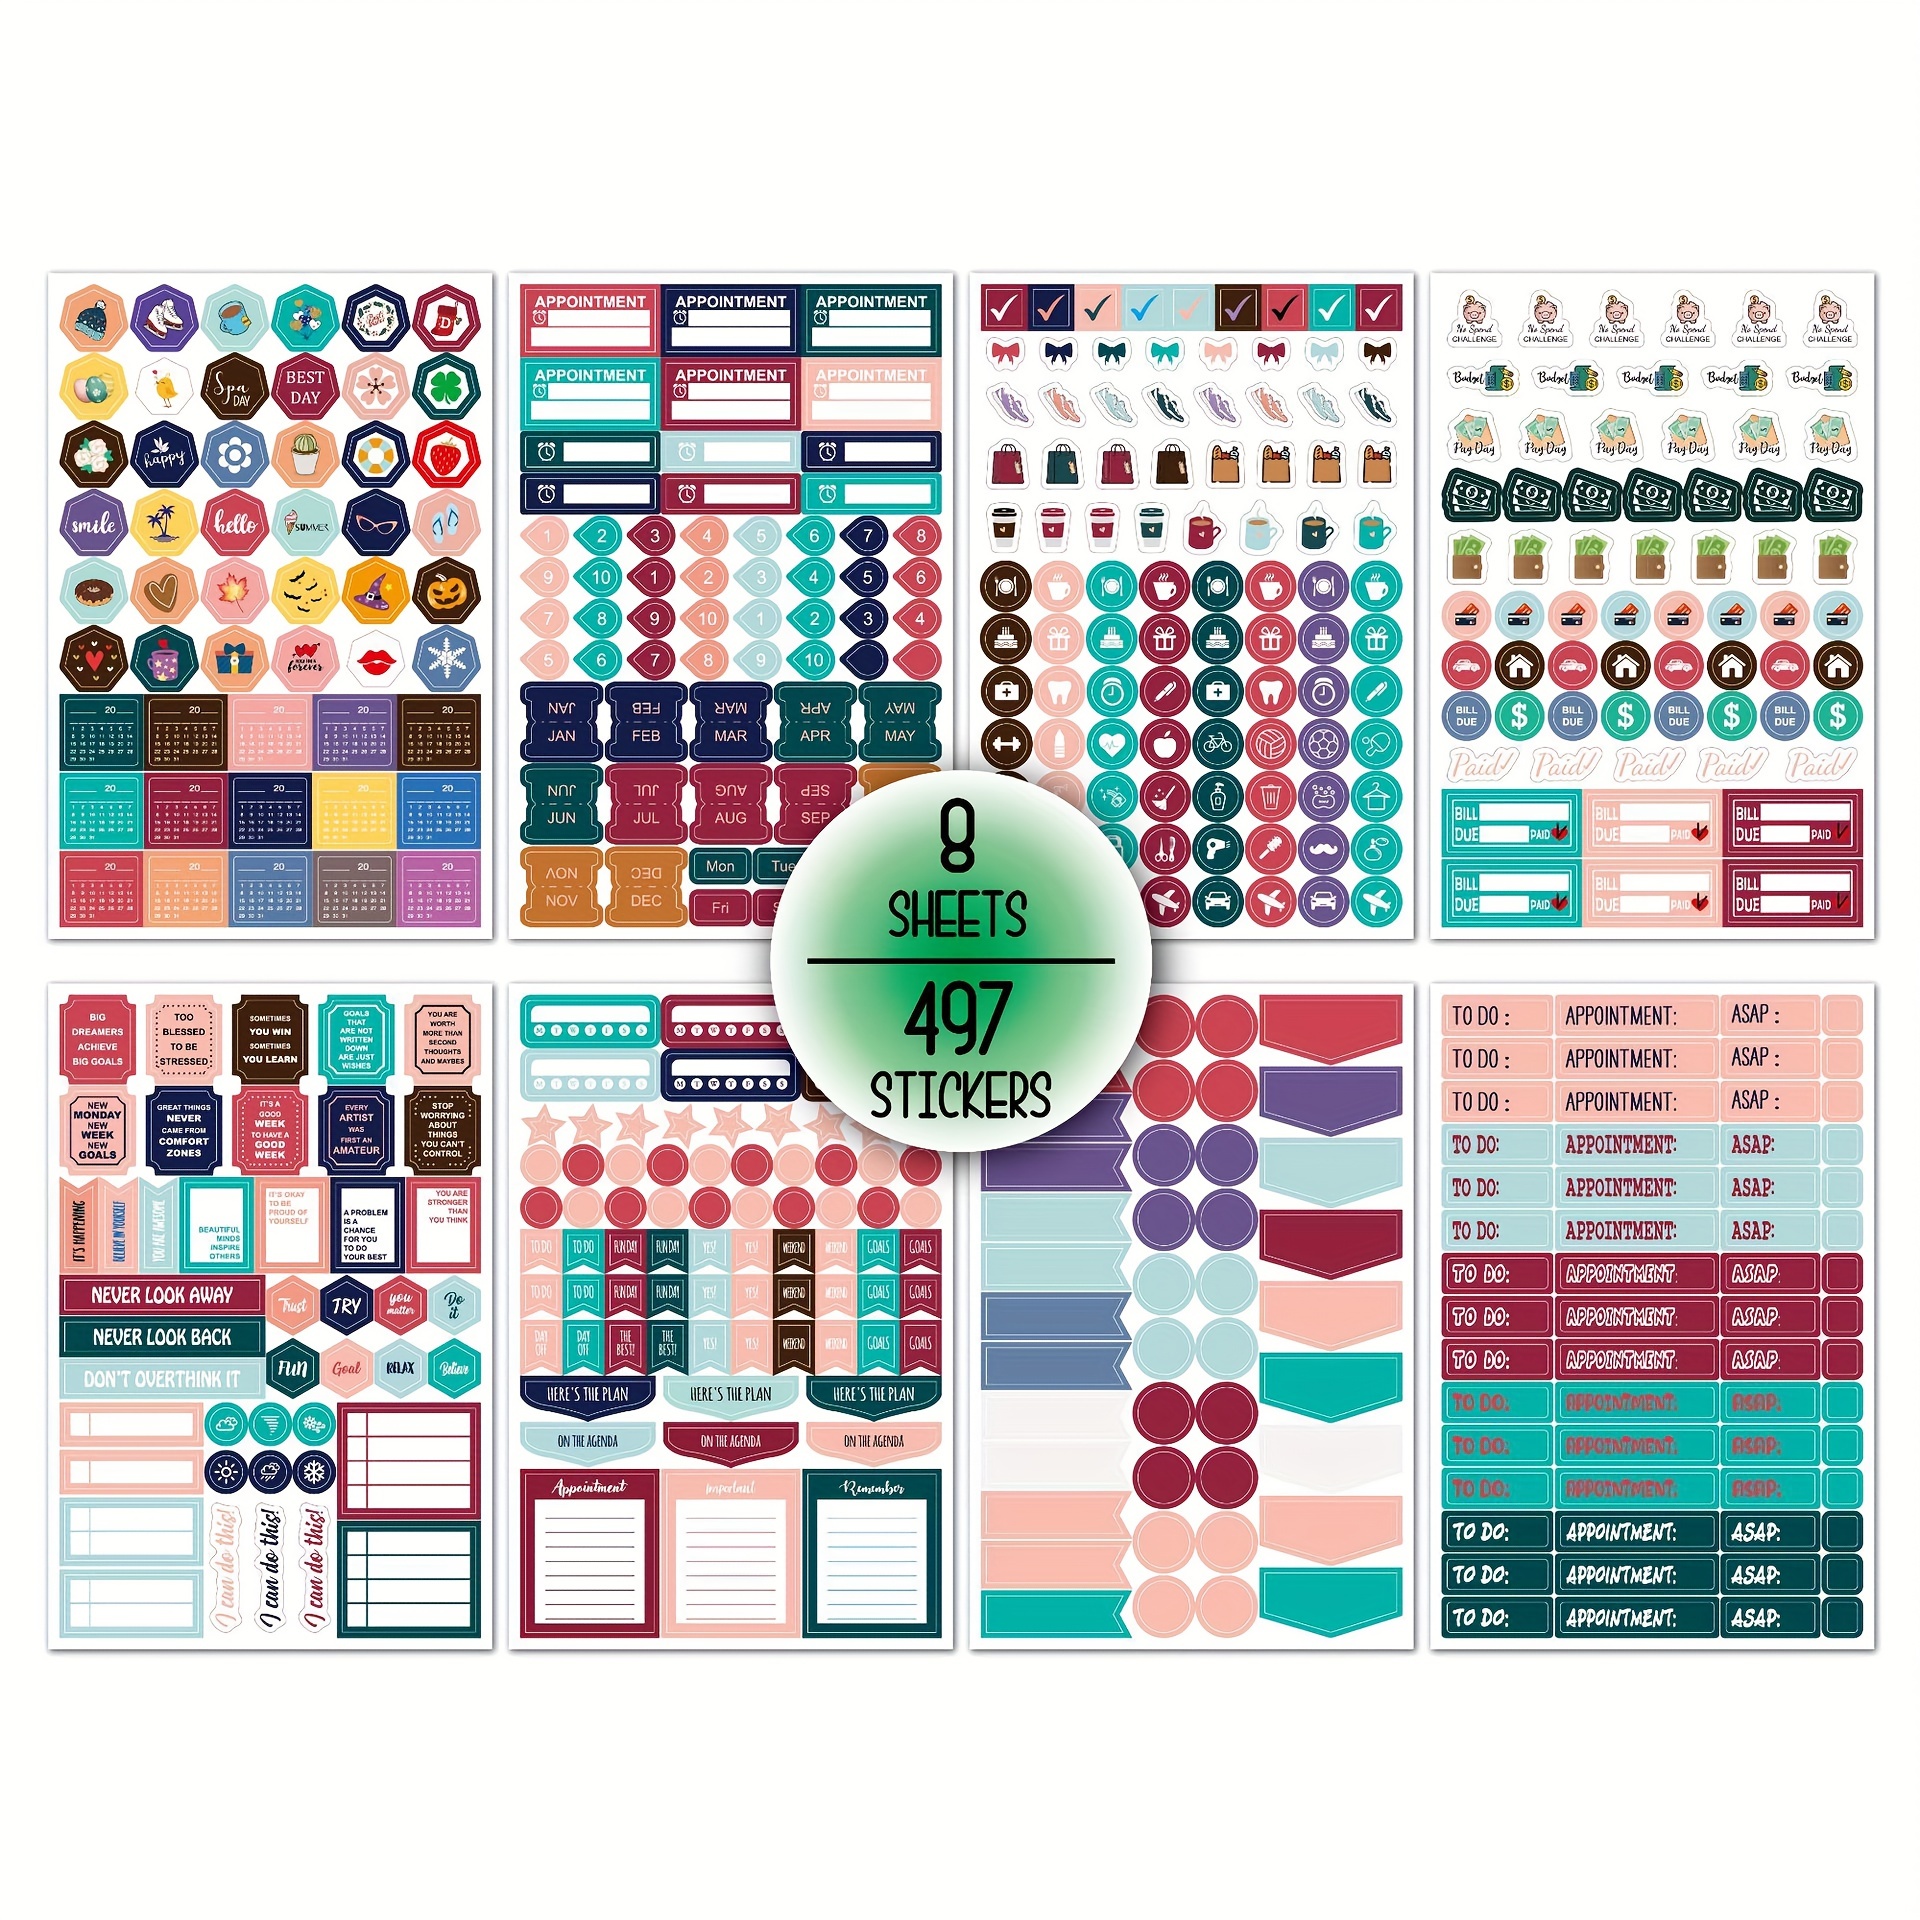 Weird Planner Stickers for Adults - Wartooth Designs